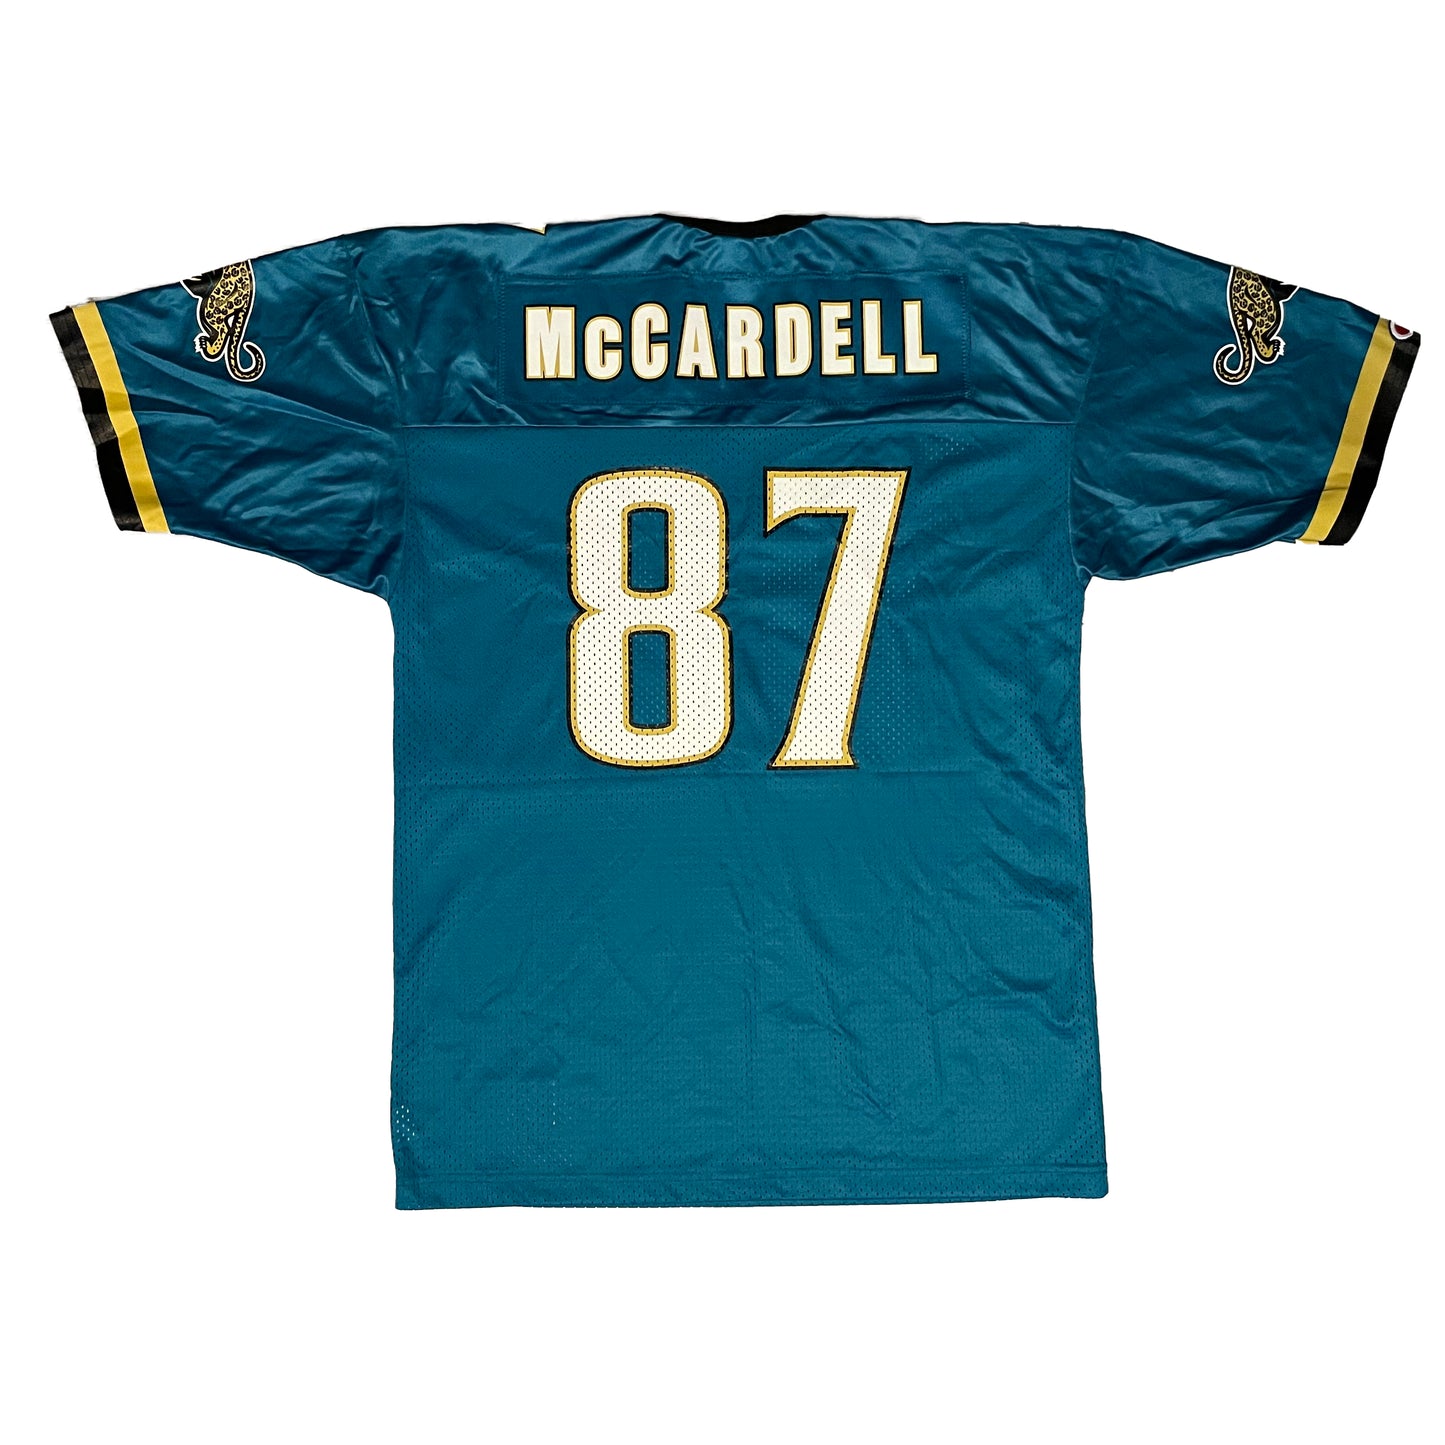 Jacksonville Jaguars DEADSTOCK Keenan McCardell jersey size LARGE